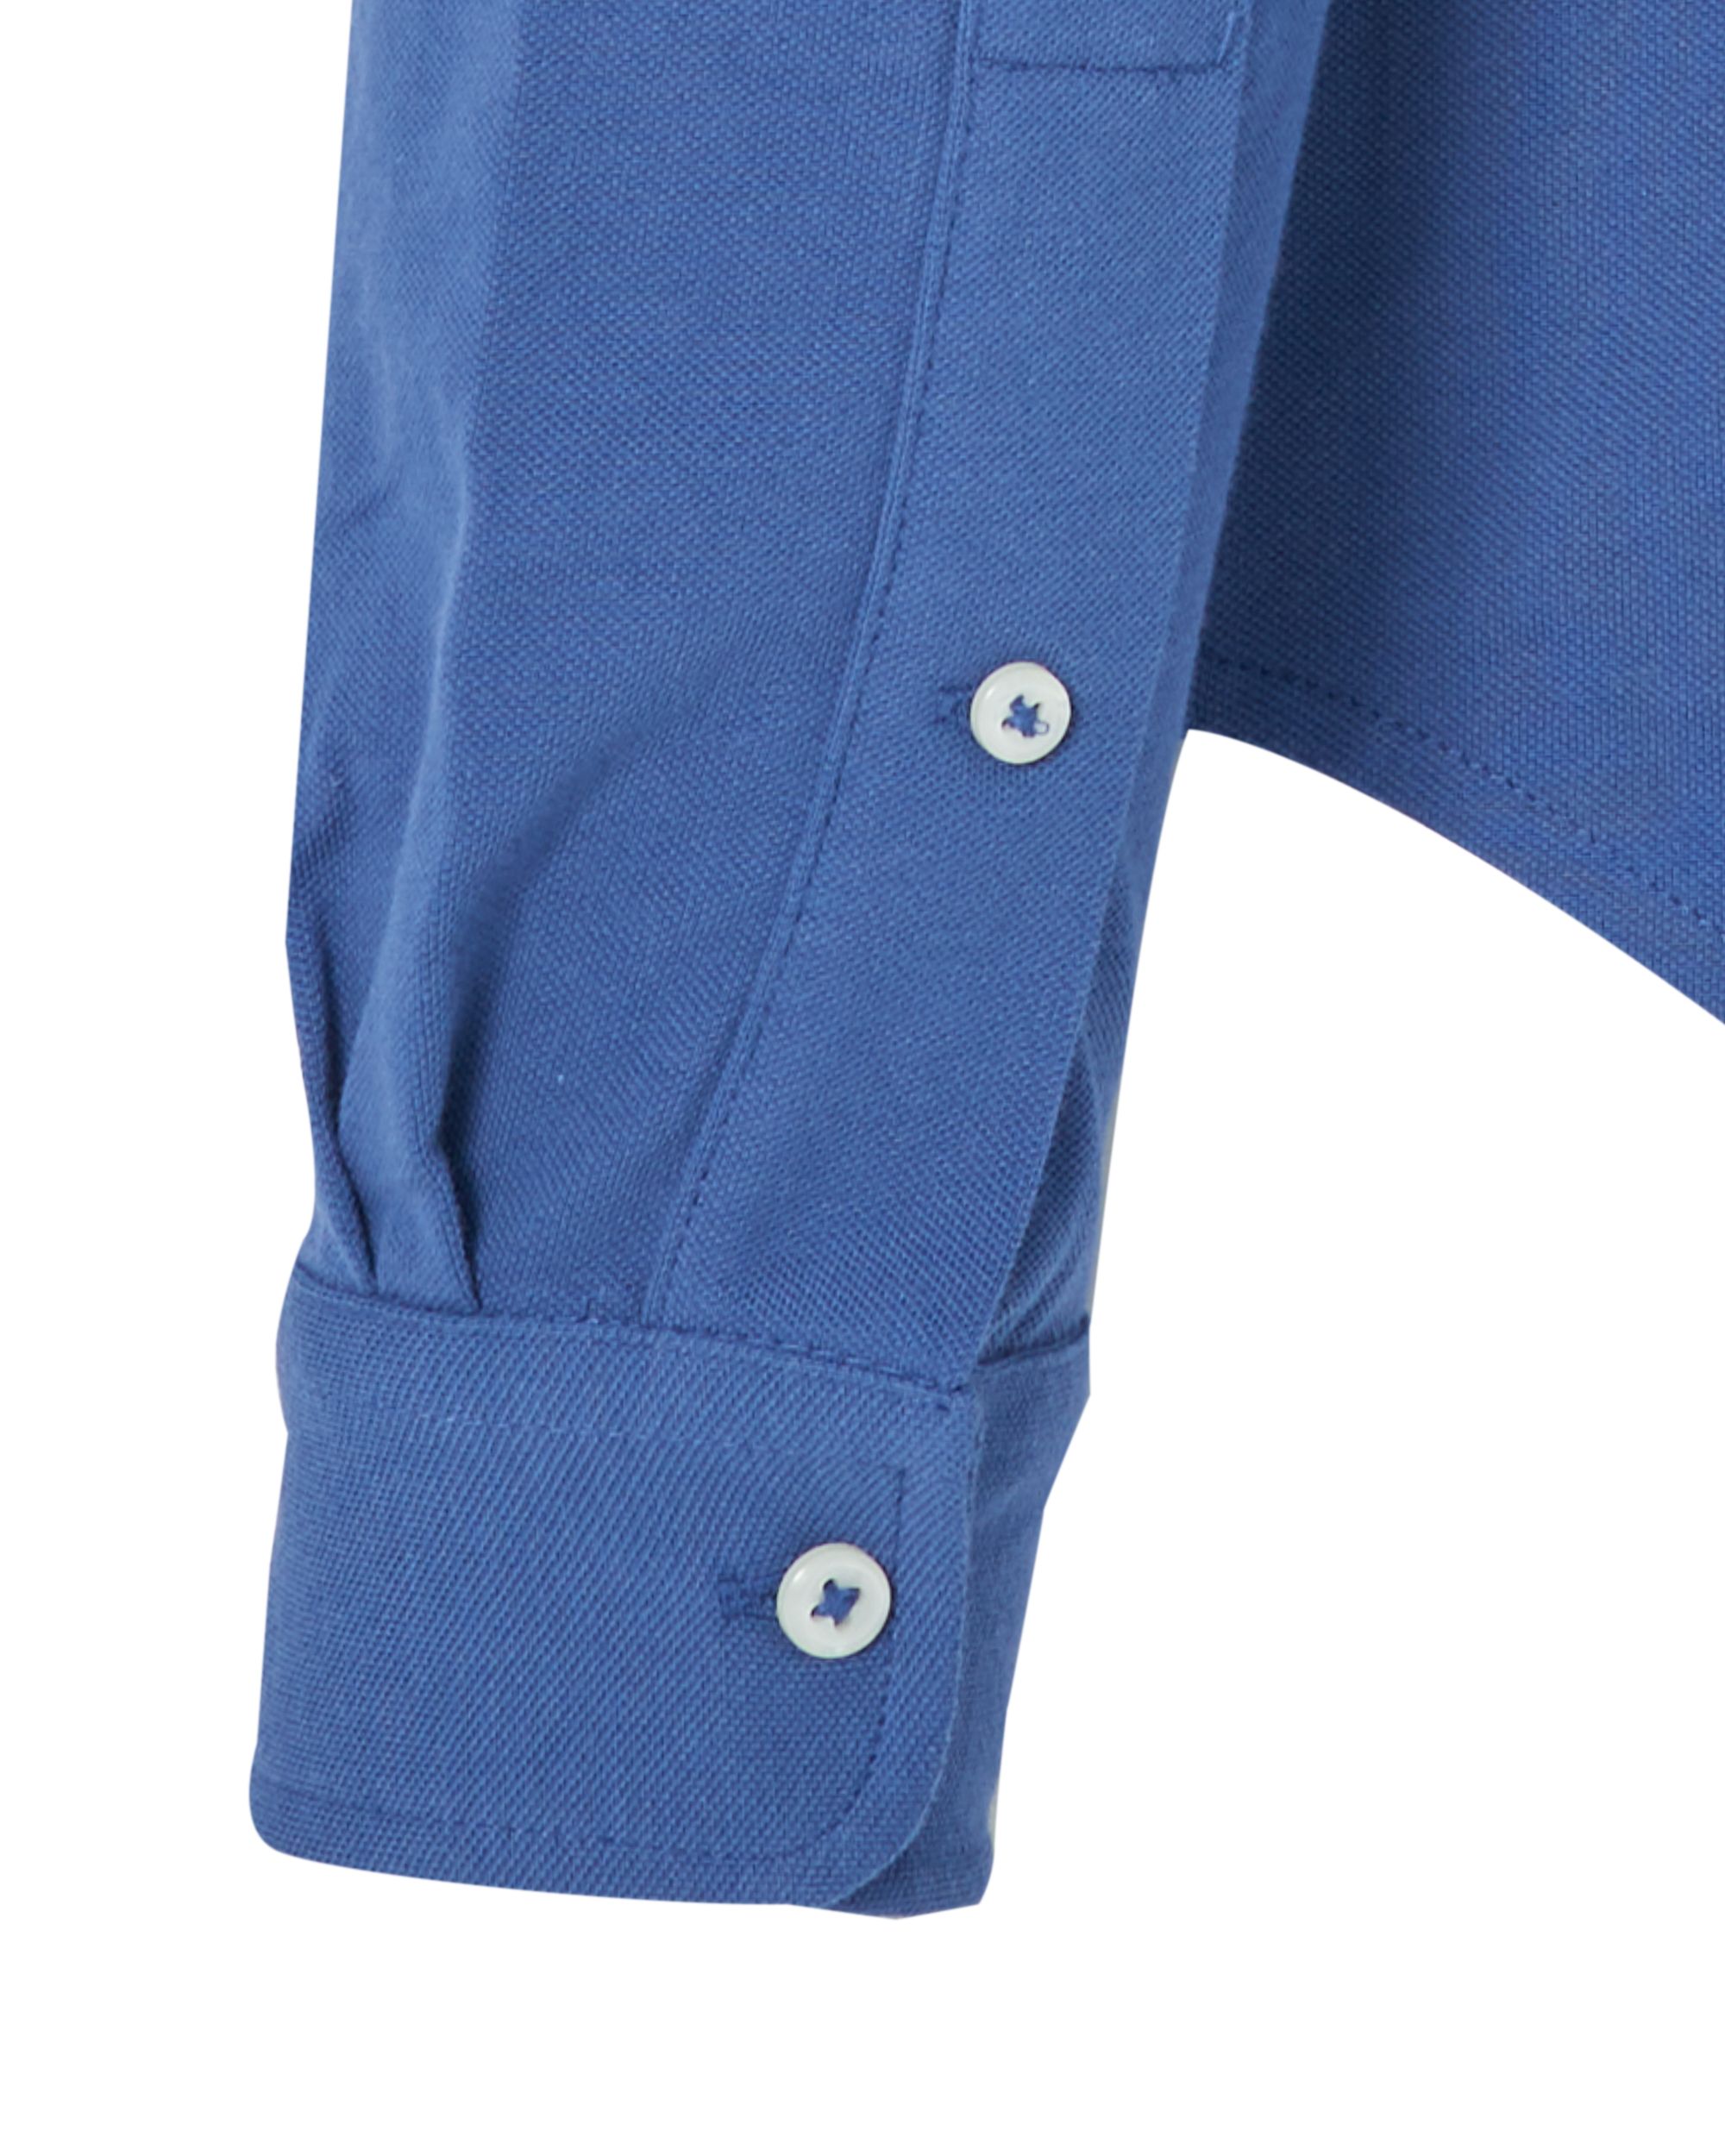 Polo Ralph Lauren Casual Overhemd LM Blauw 083420-001-L